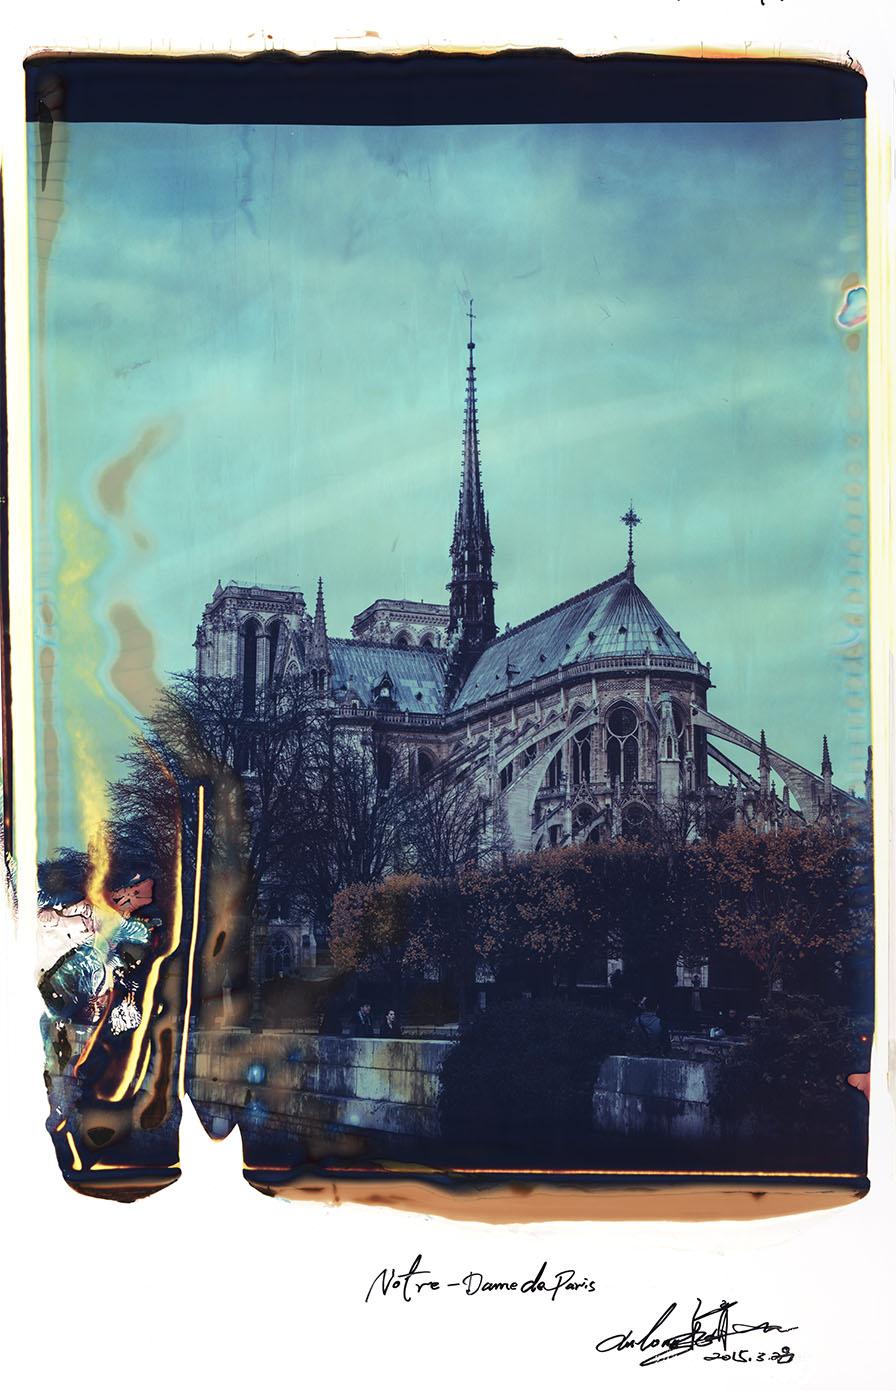 xulong zhang Color Photograph - Notre Dame 11 - Contemporary, 21st Century, Large Format Polaroid, Paris, Icons